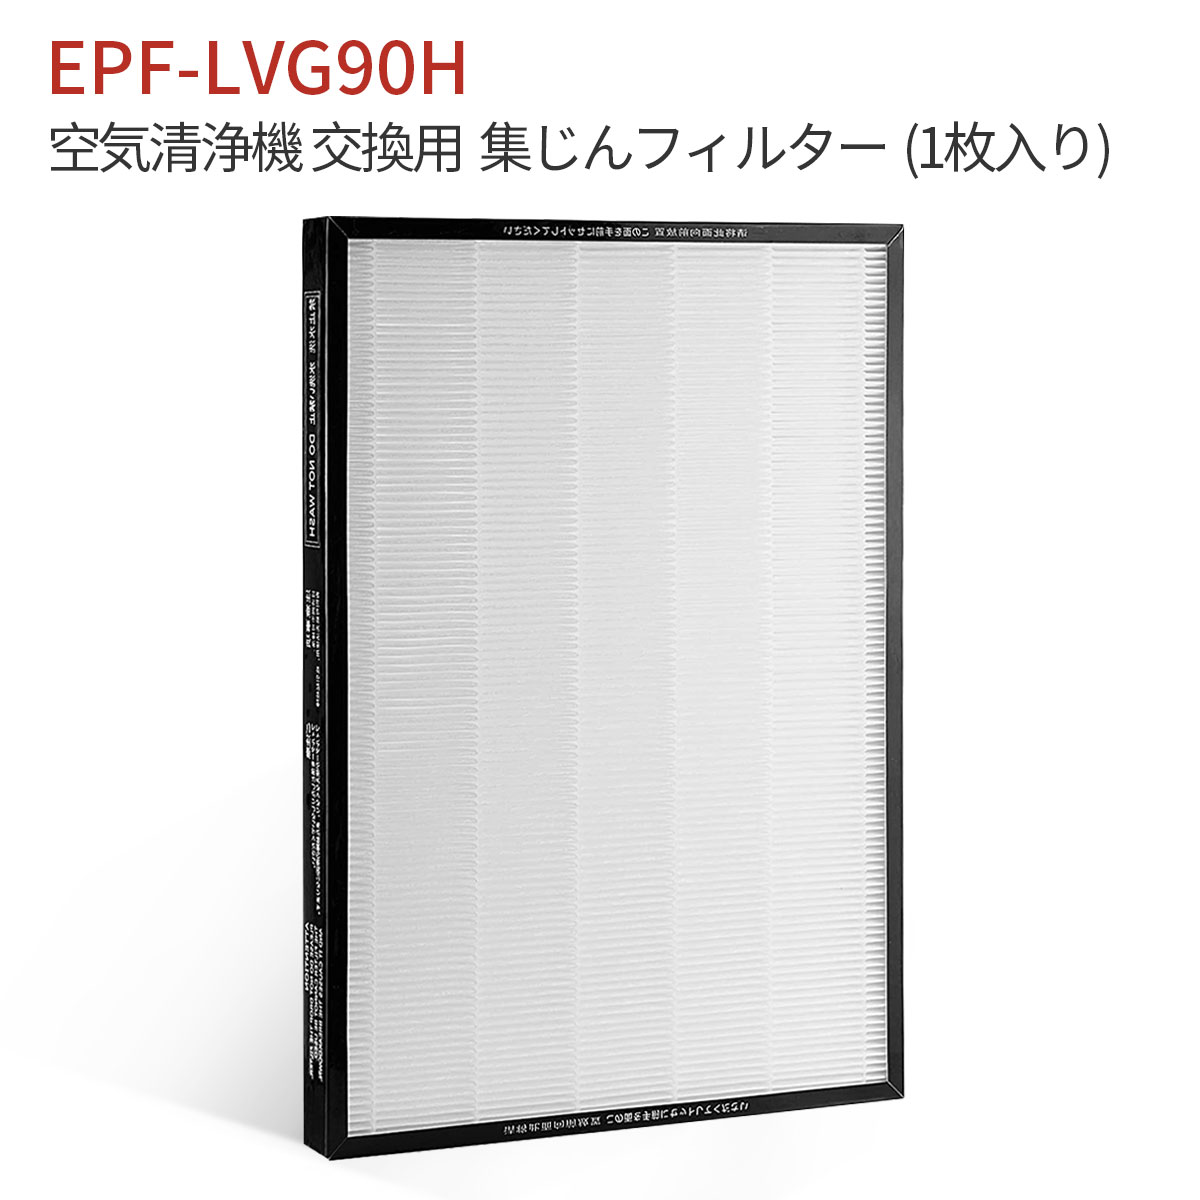 EPF-LVG90H ե륿 epf-lvg90h Ω ե륿 EP-LVG90 EP-MVG500KS ѽ...